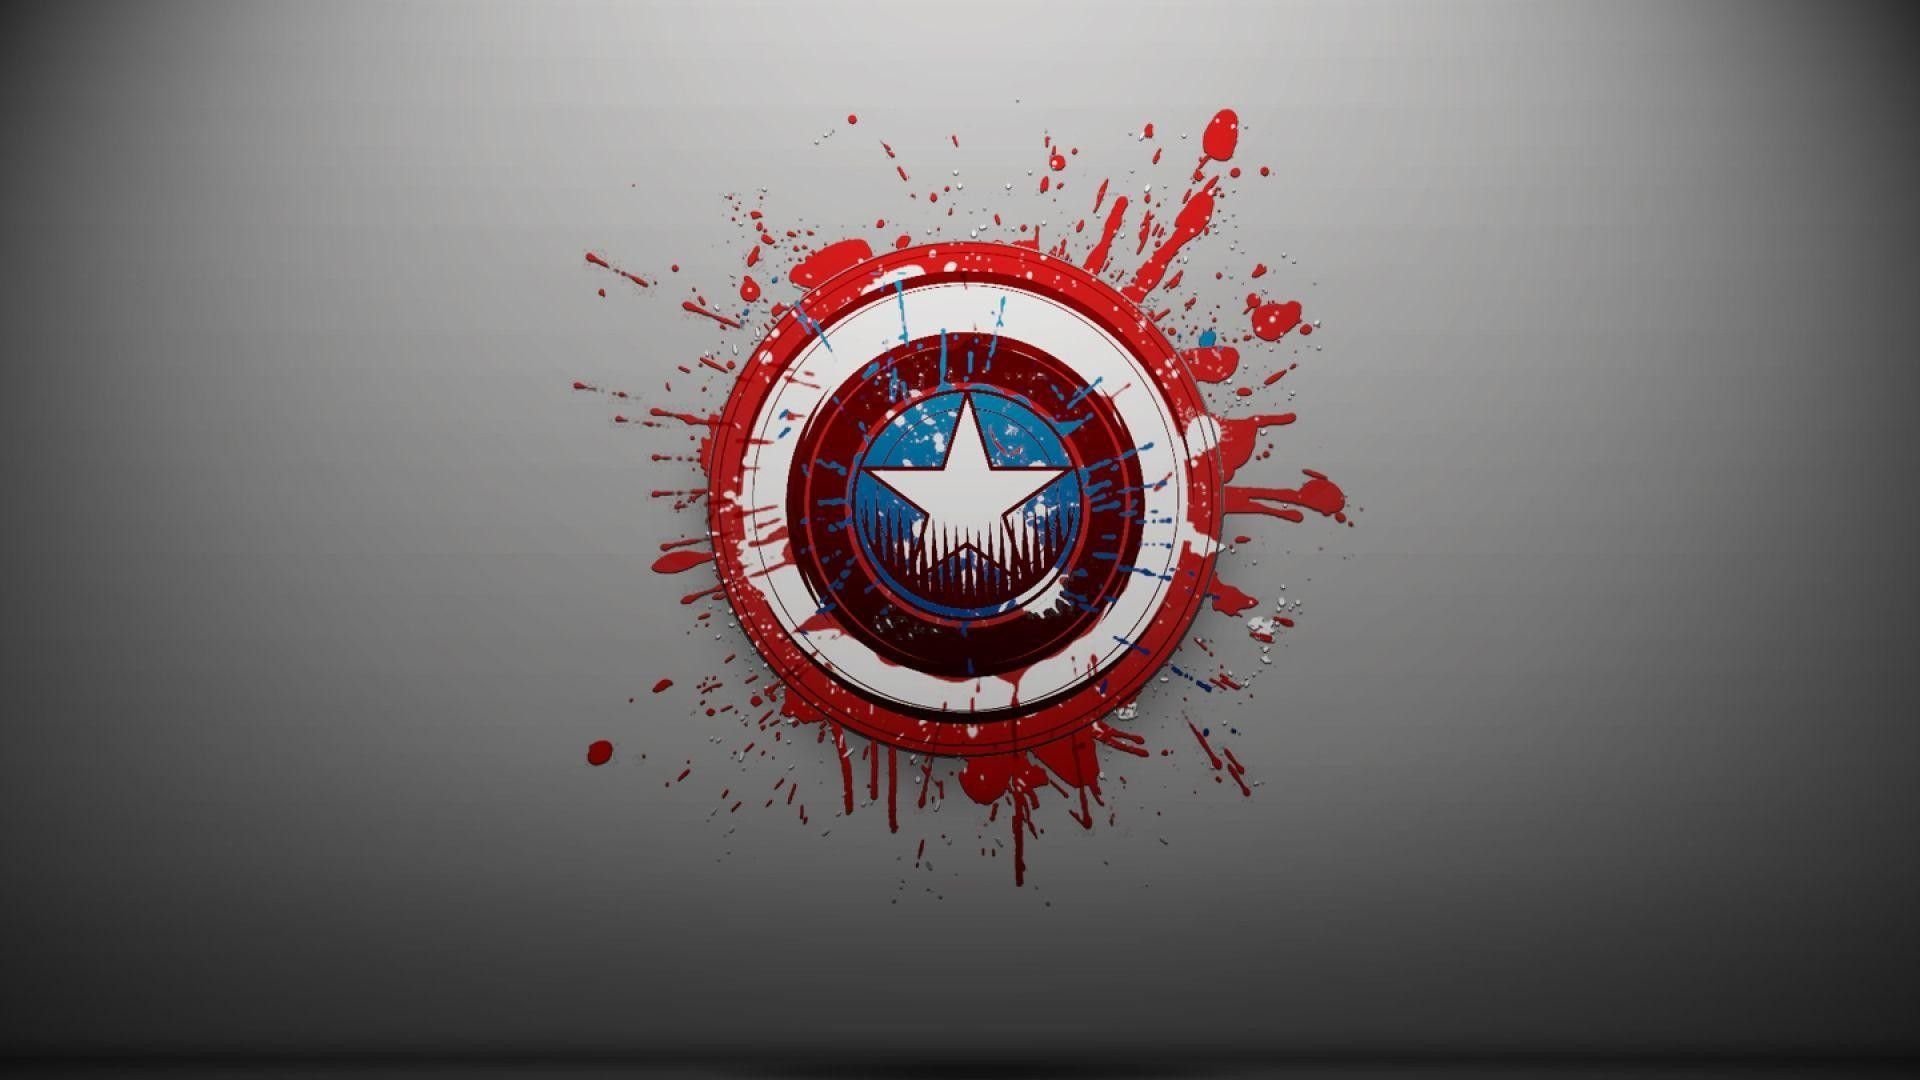 captain america desktop wallpaper